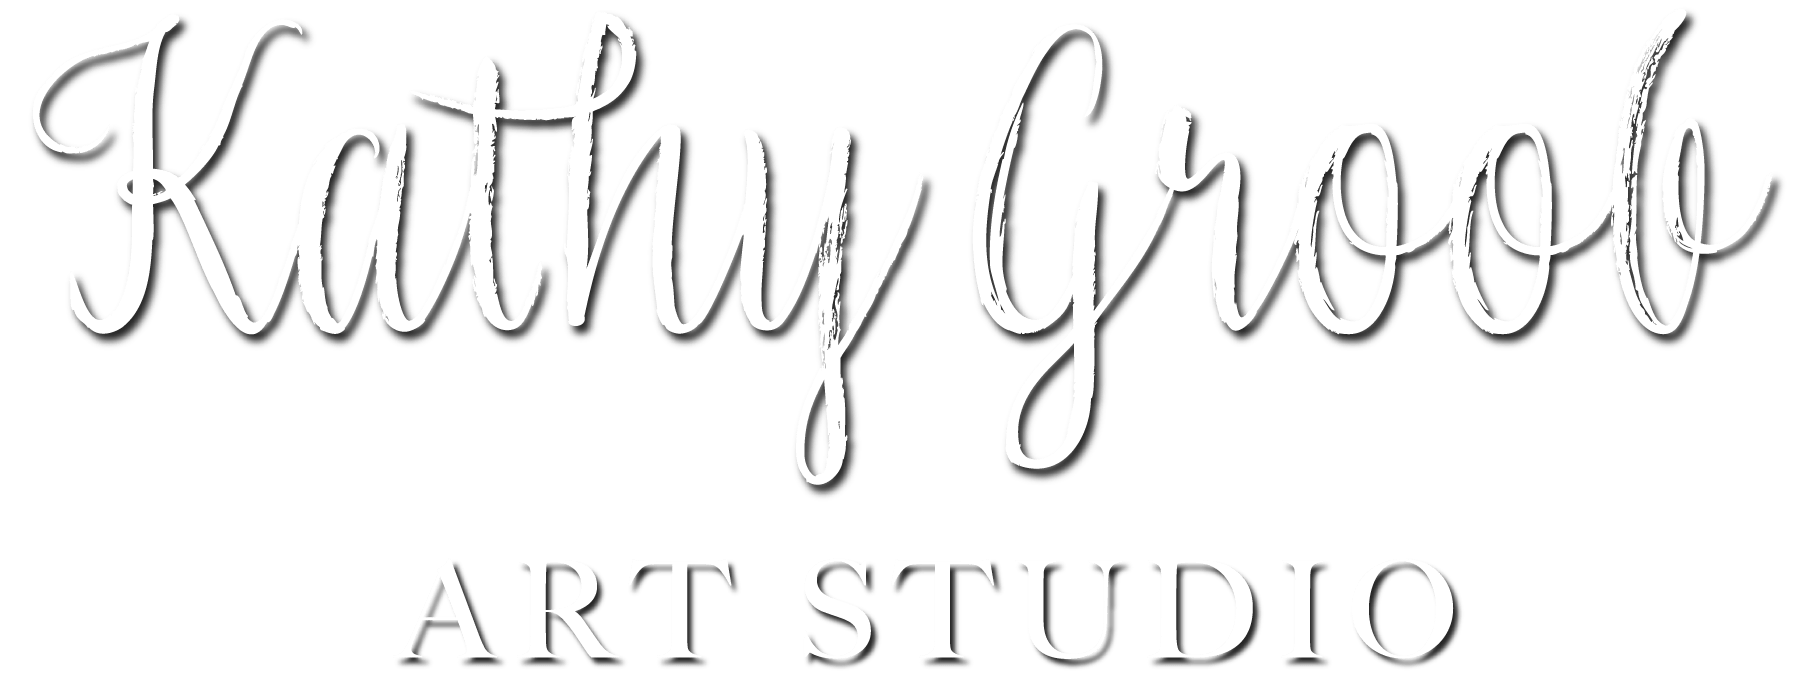 kathy-art-studio-logo-white-v1